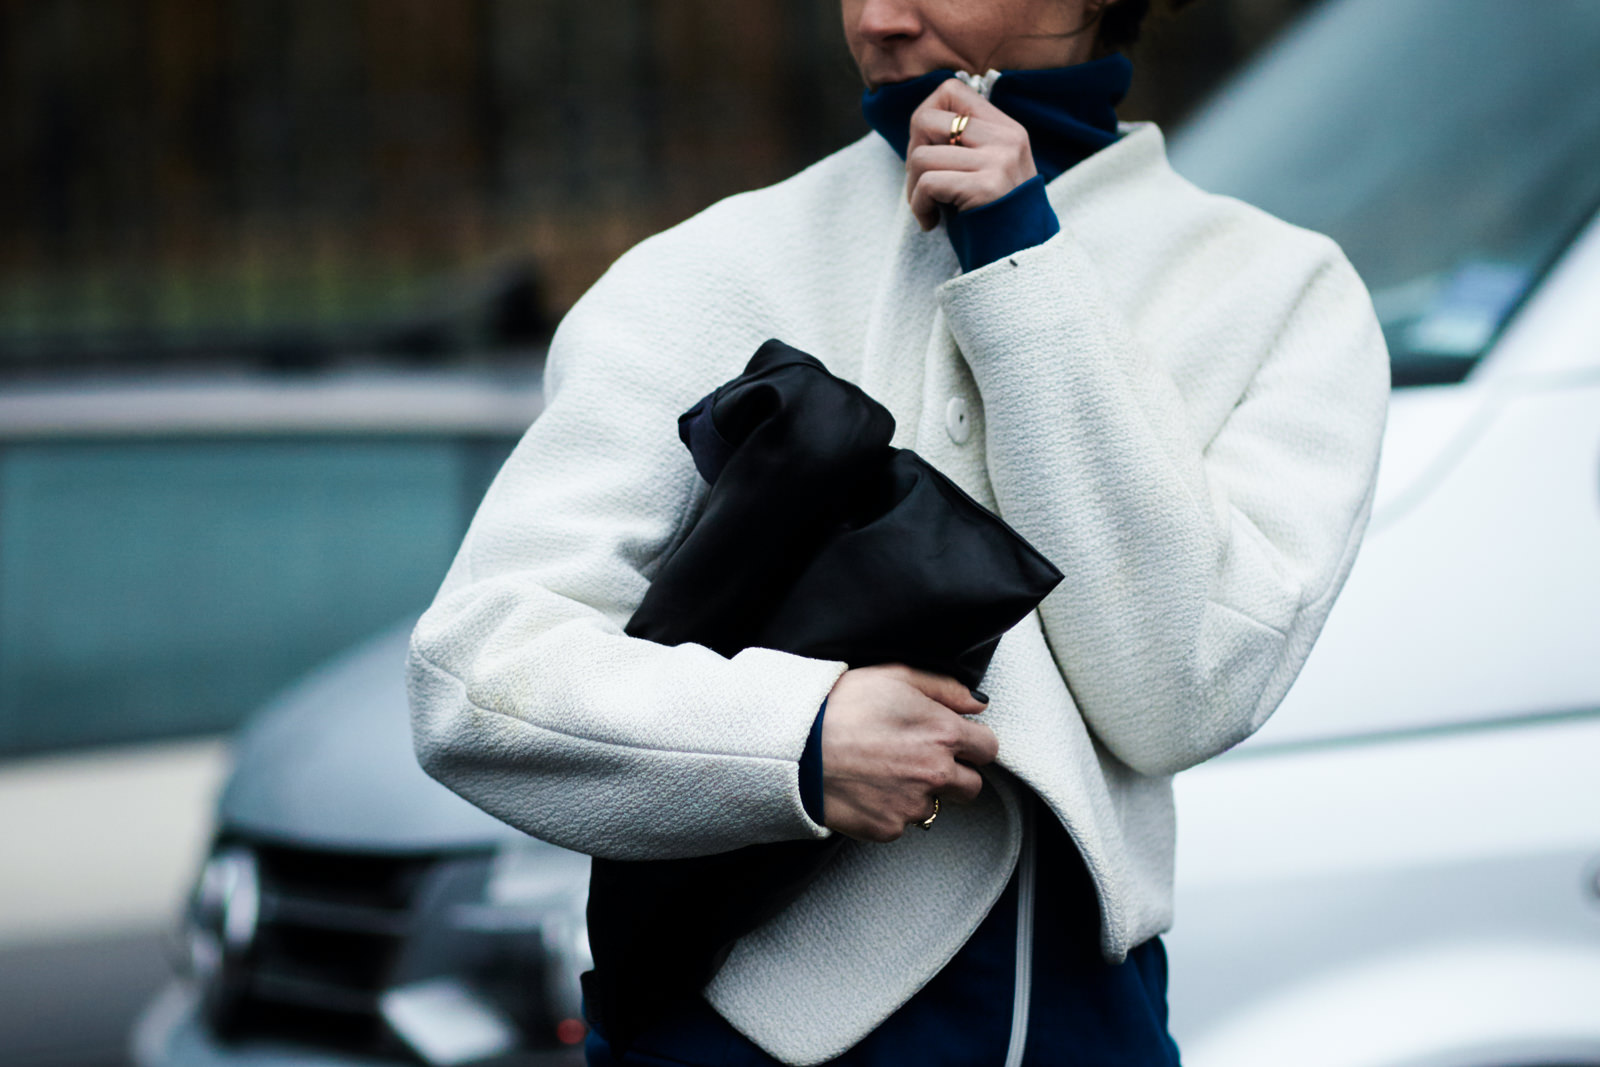 PFW Street Style: Blogger Irina Lakicevic wearing a white jacket before a fashion show at Paris fashion week.